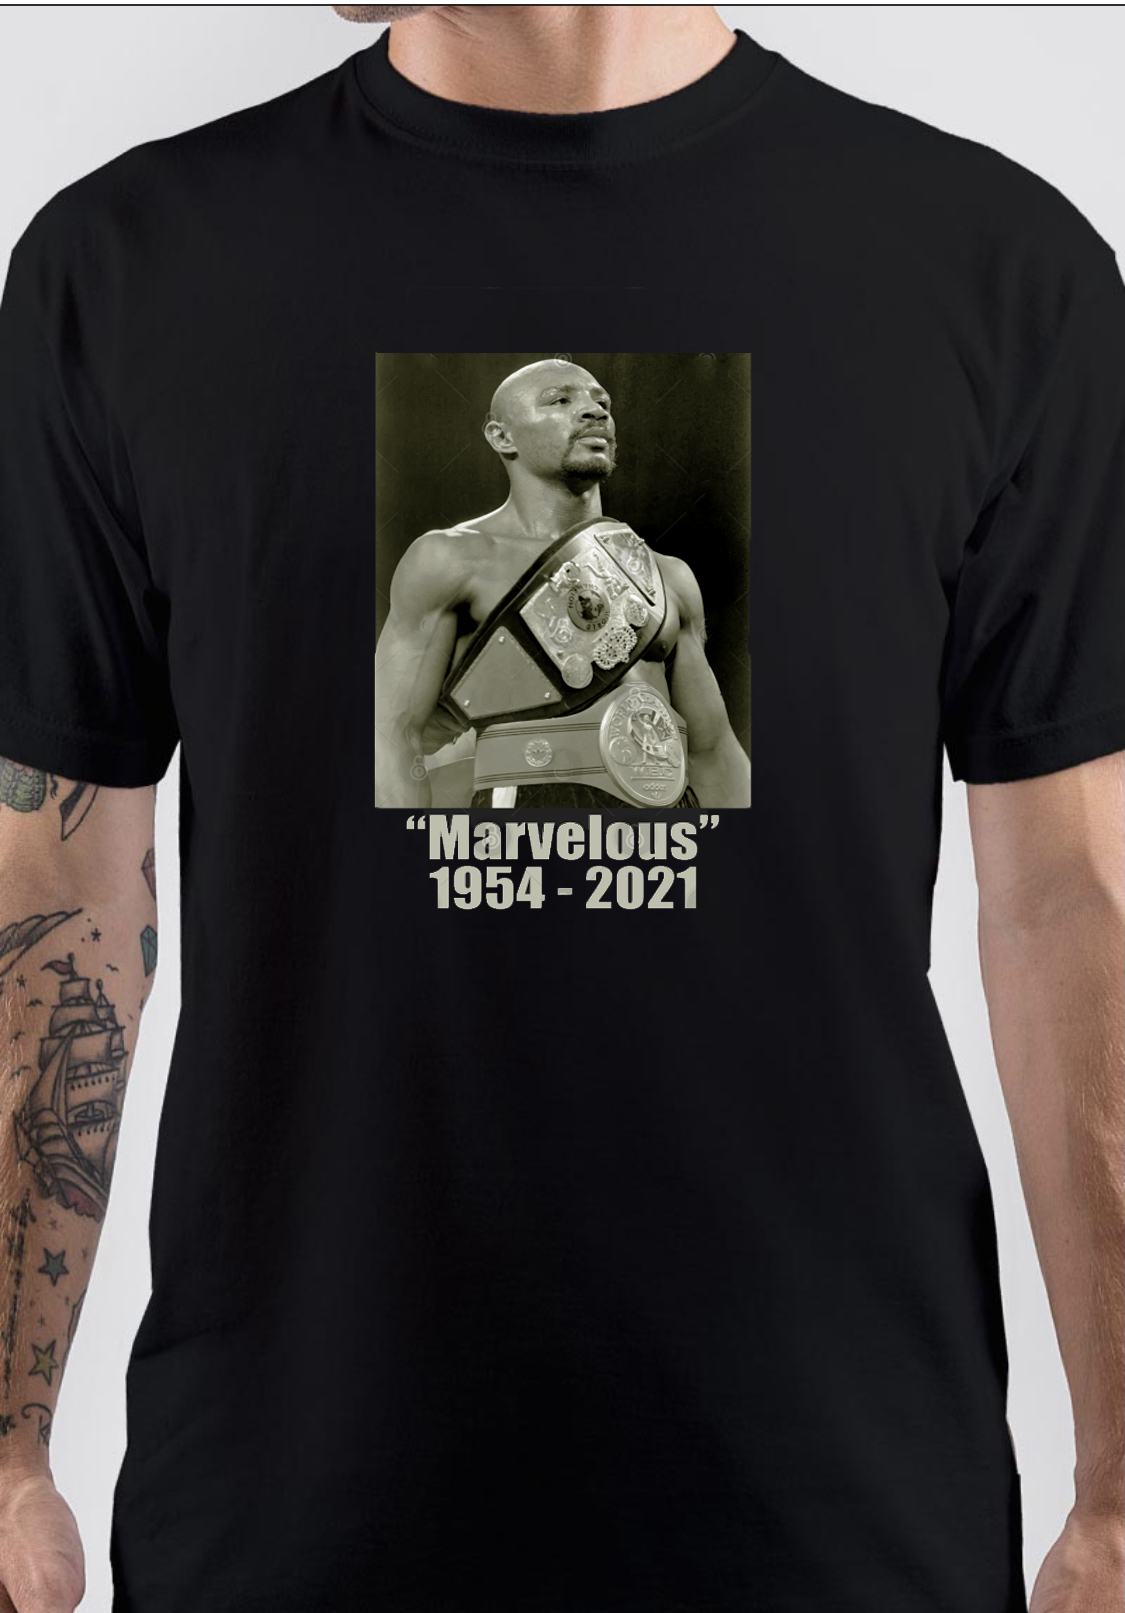 Marvelous Marvin Hagler T-Shirt And Merchandise